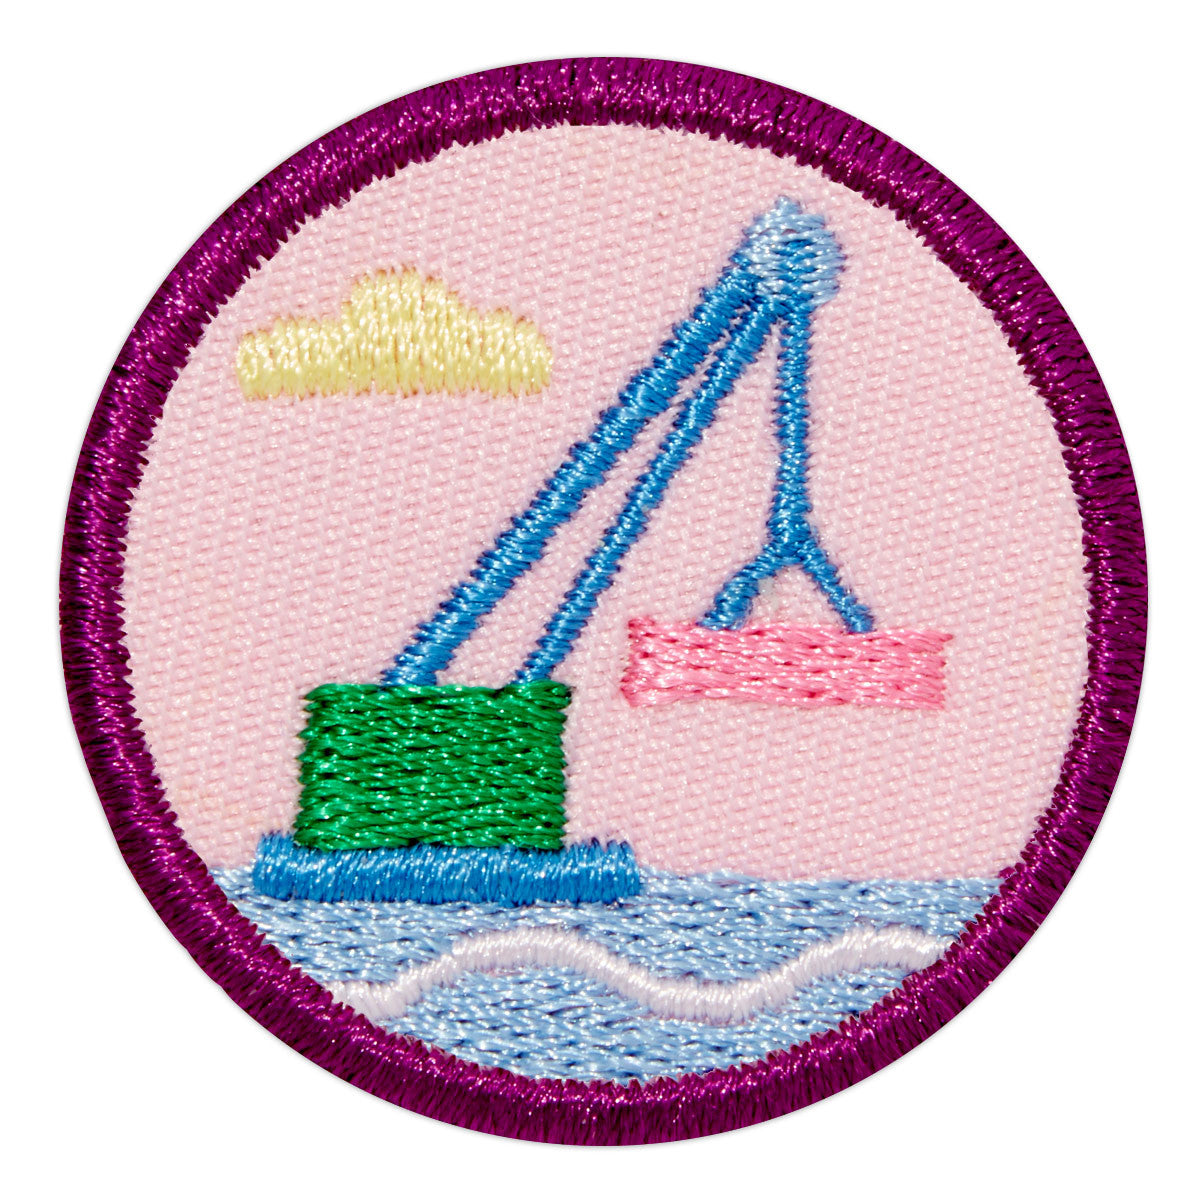 Girl Scouts Junior Crane Design Challenge Badge - Basics Clothing Store